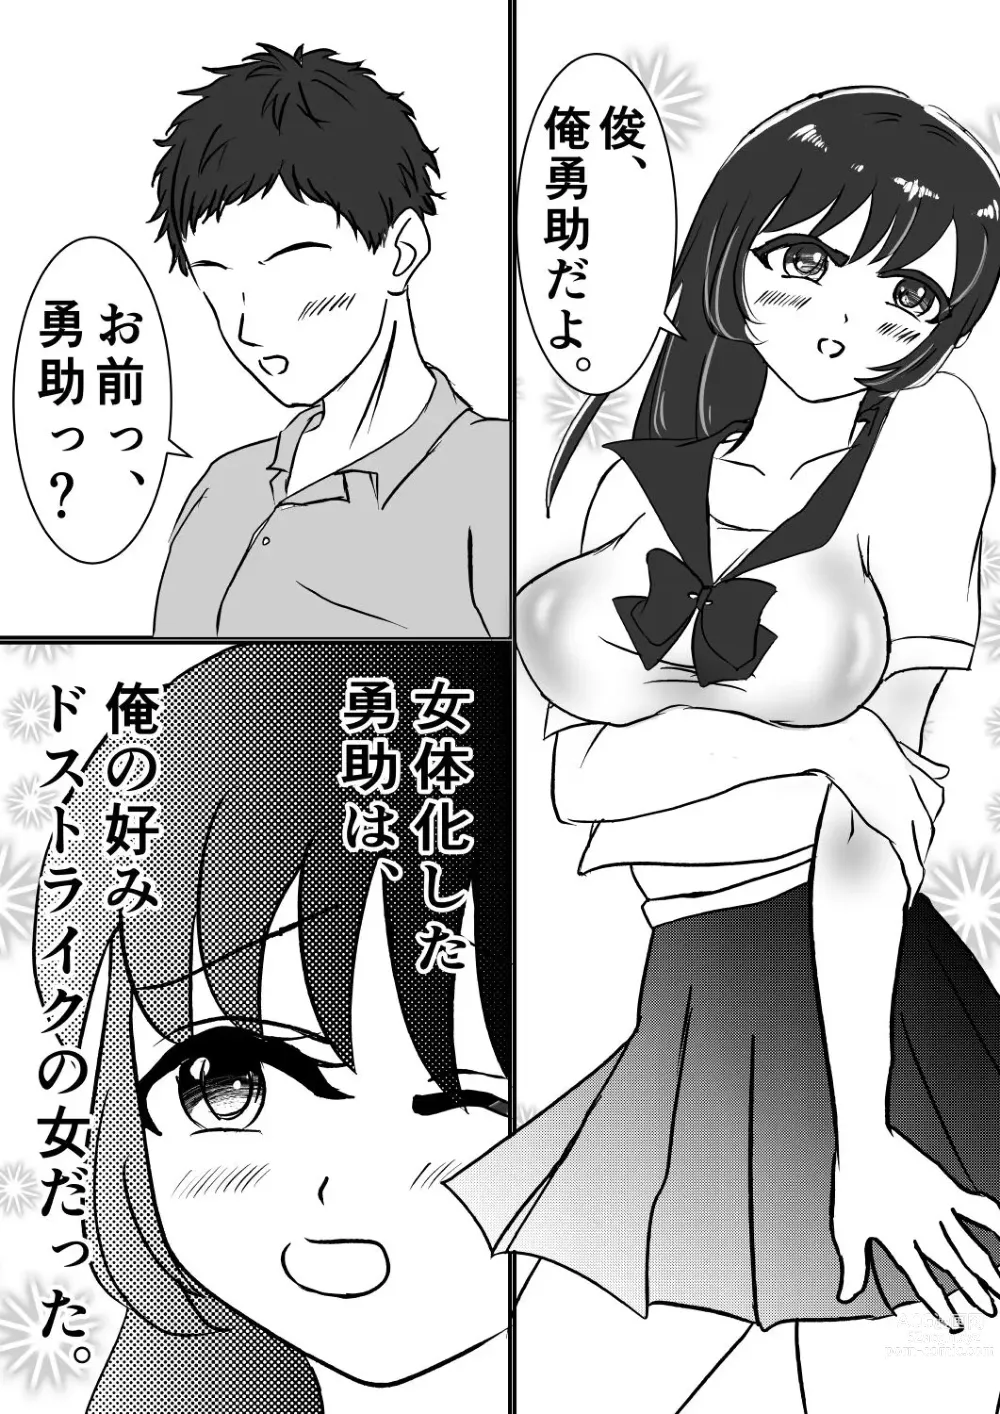 Page 6 of doujinshi 皮をかぶった親友が最高のセフレになった話。